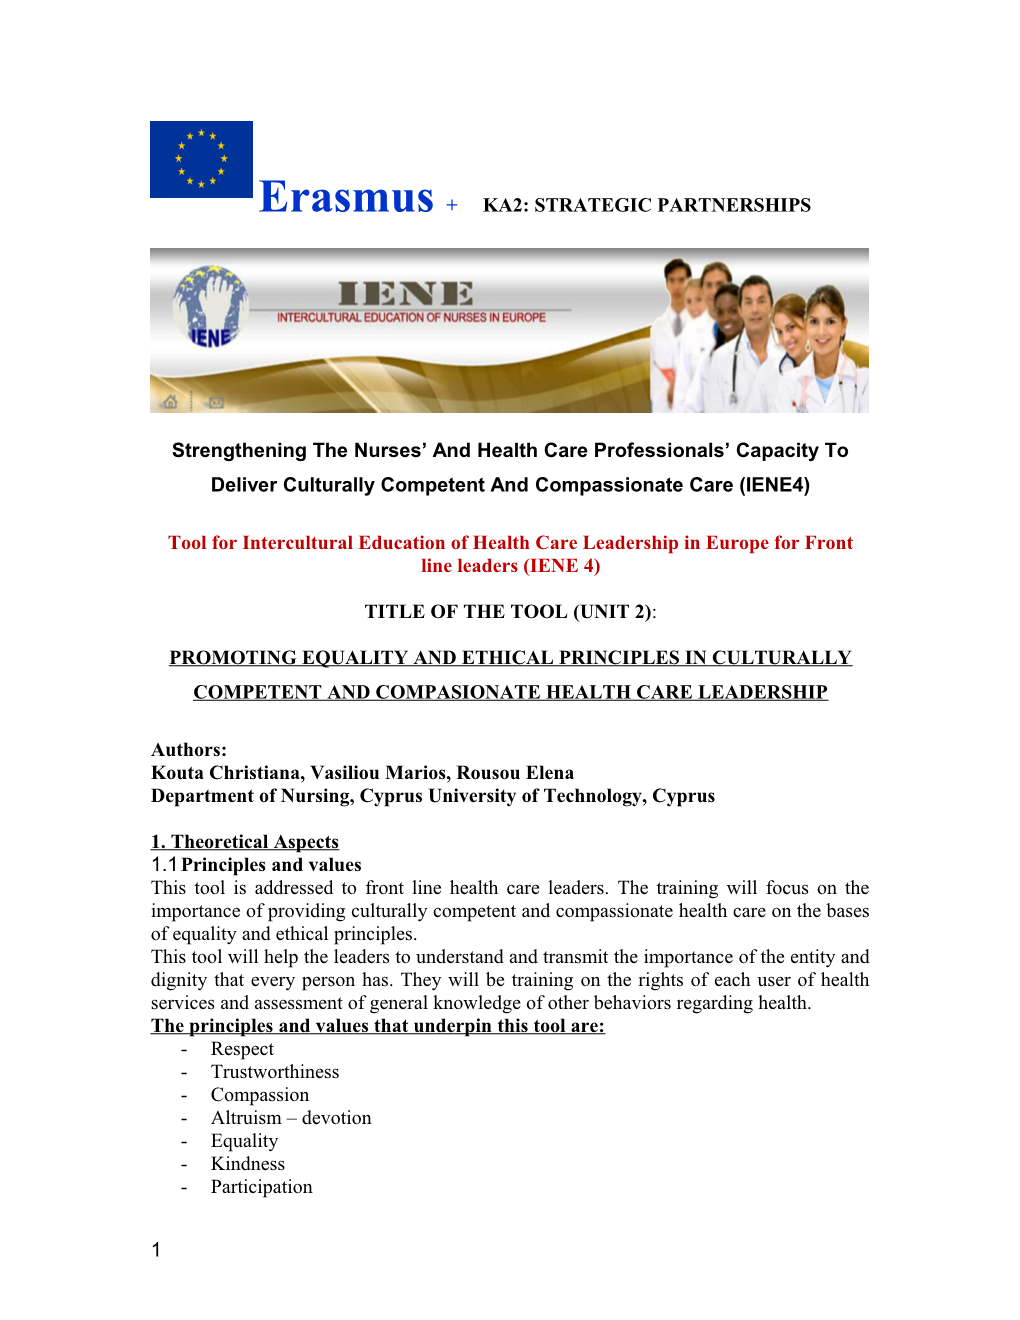 Toolforinterculturaleducation of Health Care Leadershipineuropeforfrontlineleaders(IENE 4)